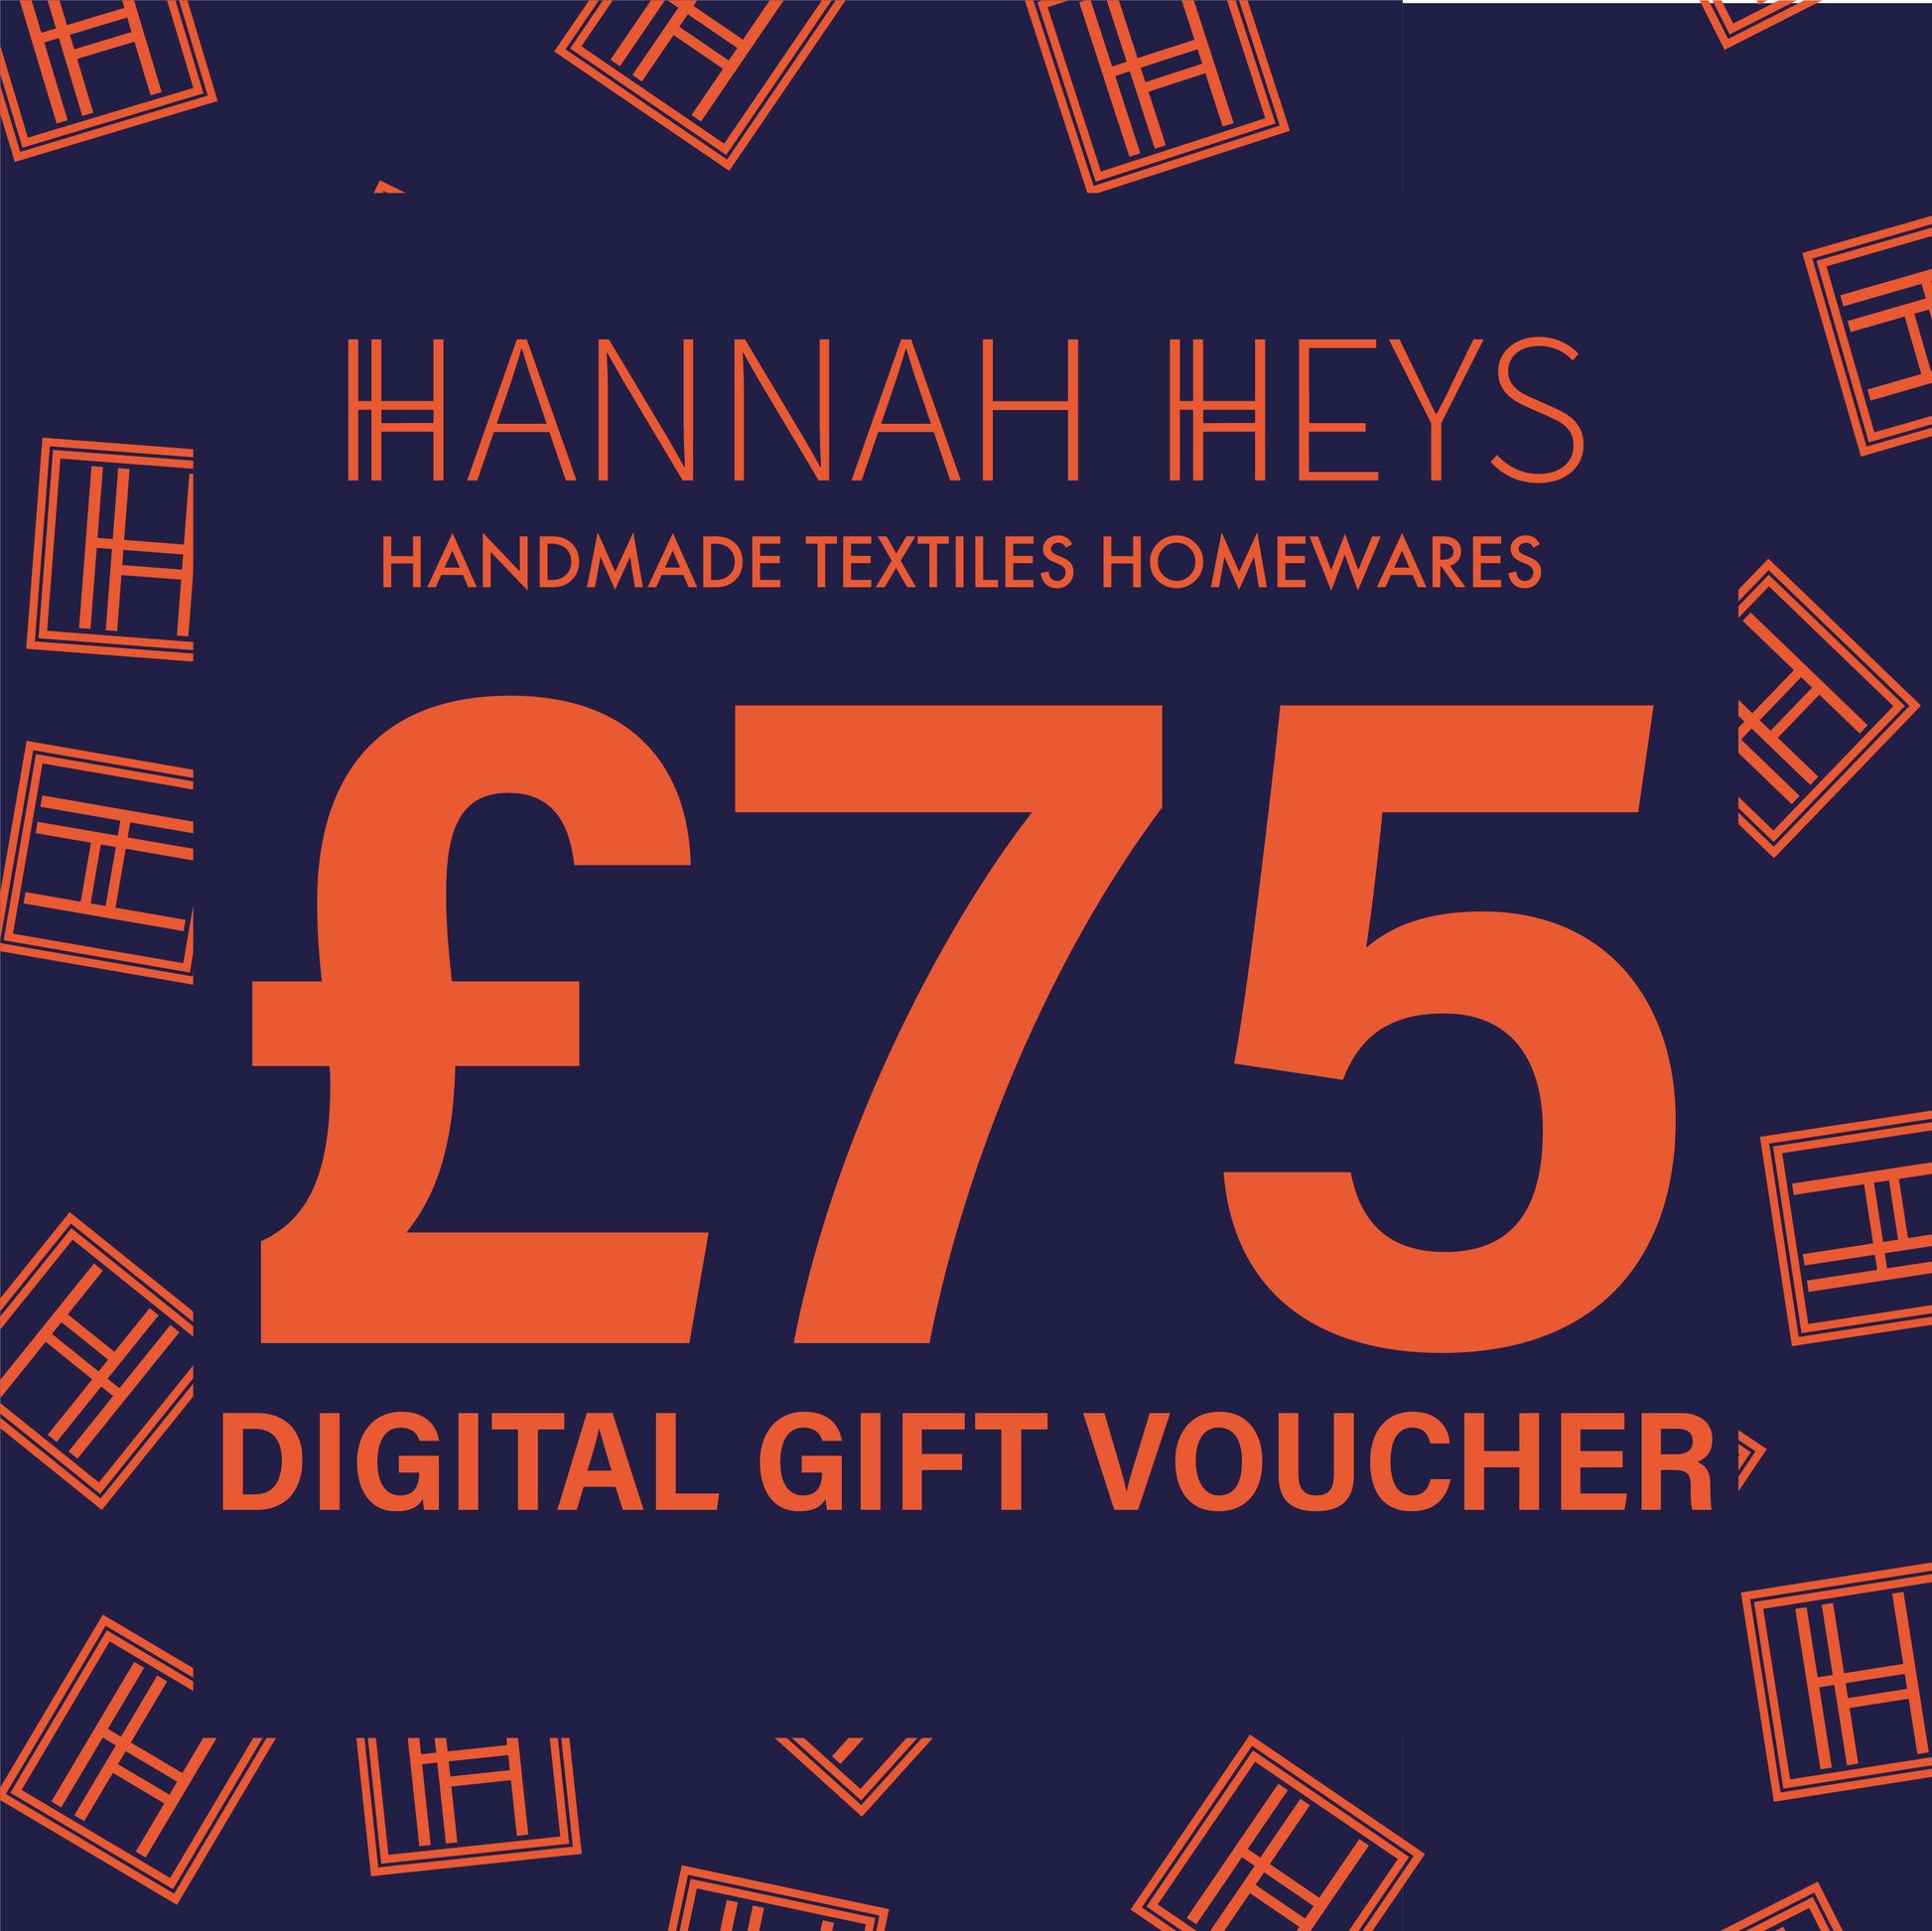 Dark Purple Image with Bright Orange Lettering, advertising a £75 Digital Gift Voucher for Hannah Heys Textiles.